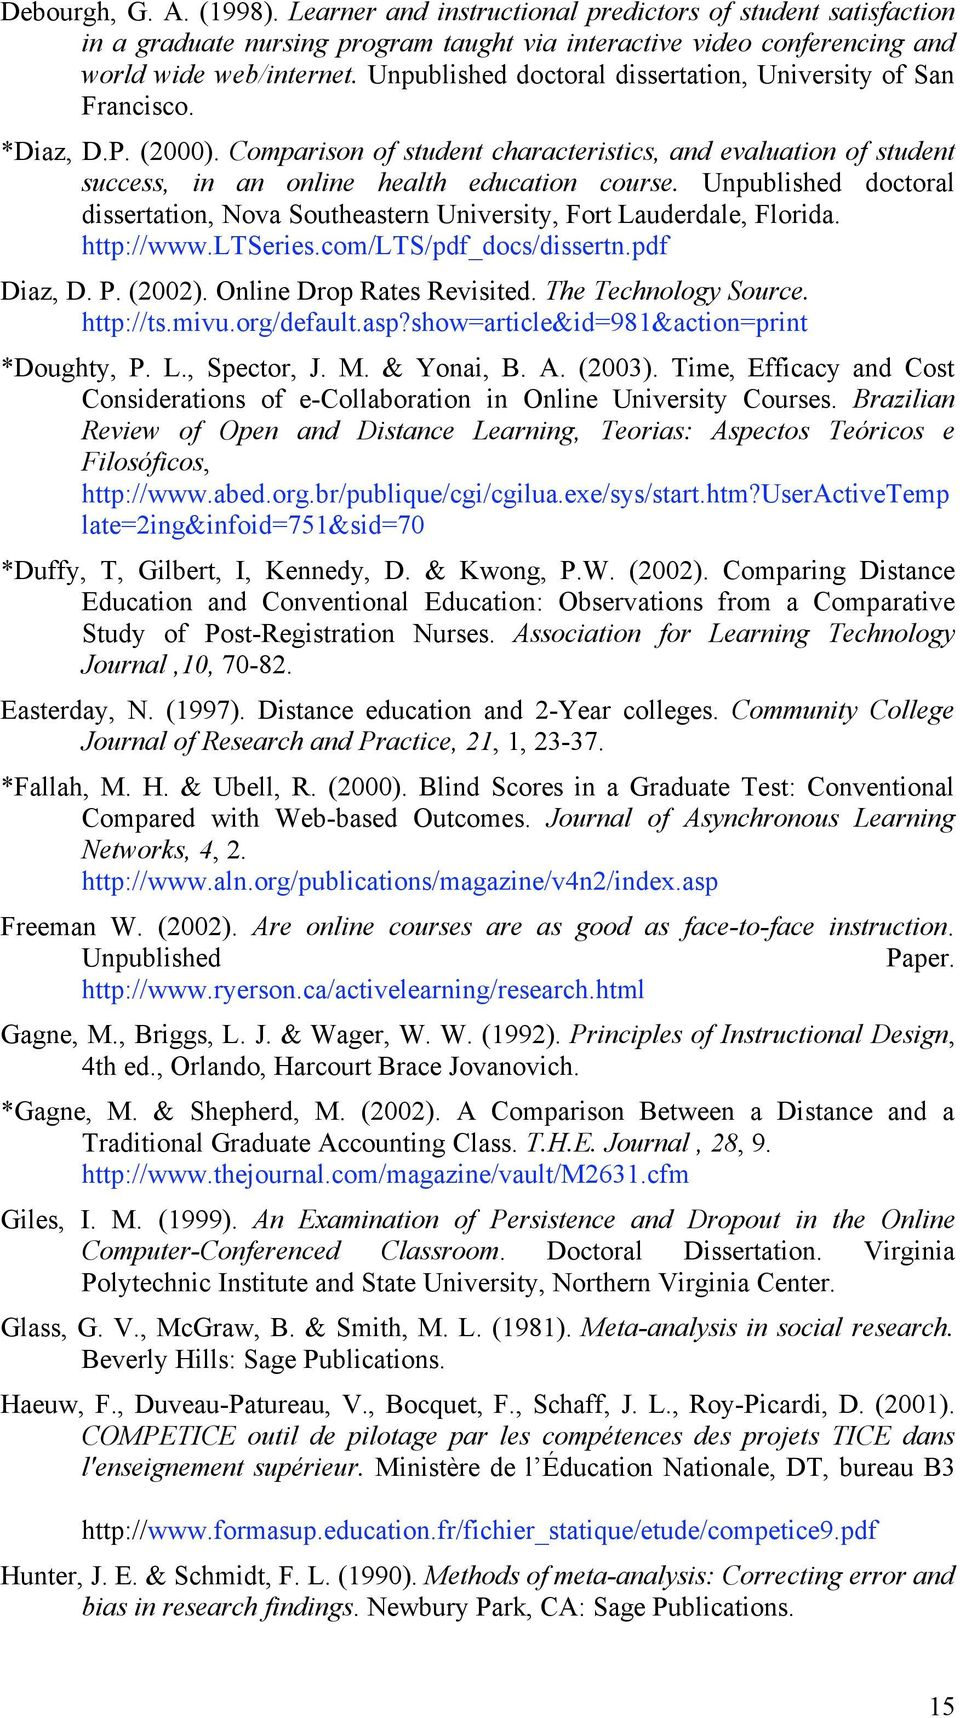 Unpublished doctoral dissertation, Nova Southeastern University, Fort Lauderdale, Florida. http://www.ltseries.com/lts/pdf_docs/dissertn.pdf Diaz, D. P. (2002). Online Drop Rates Revisited.